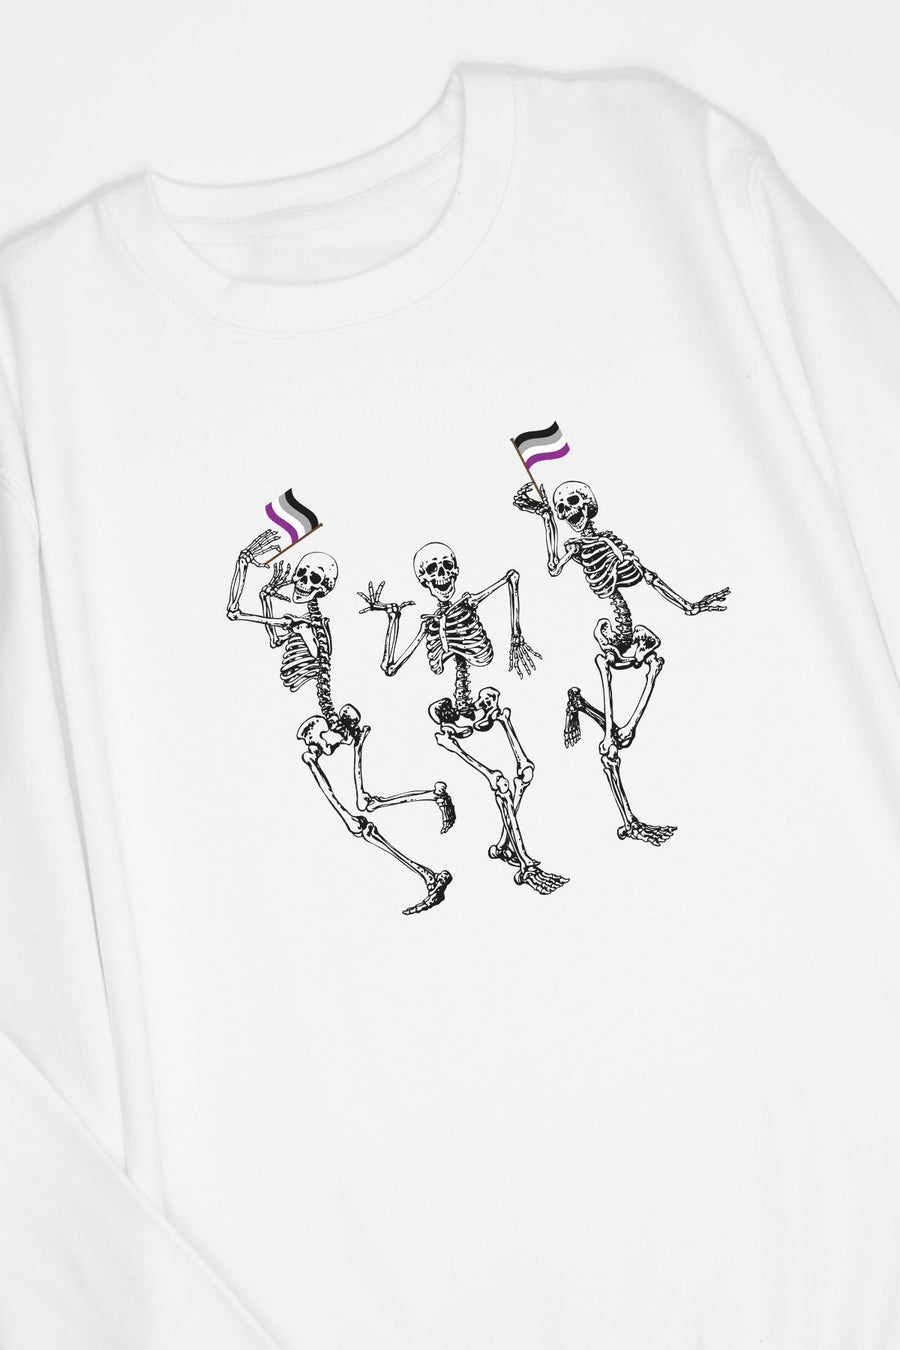 Dancing Skeletons Asexual Sweat